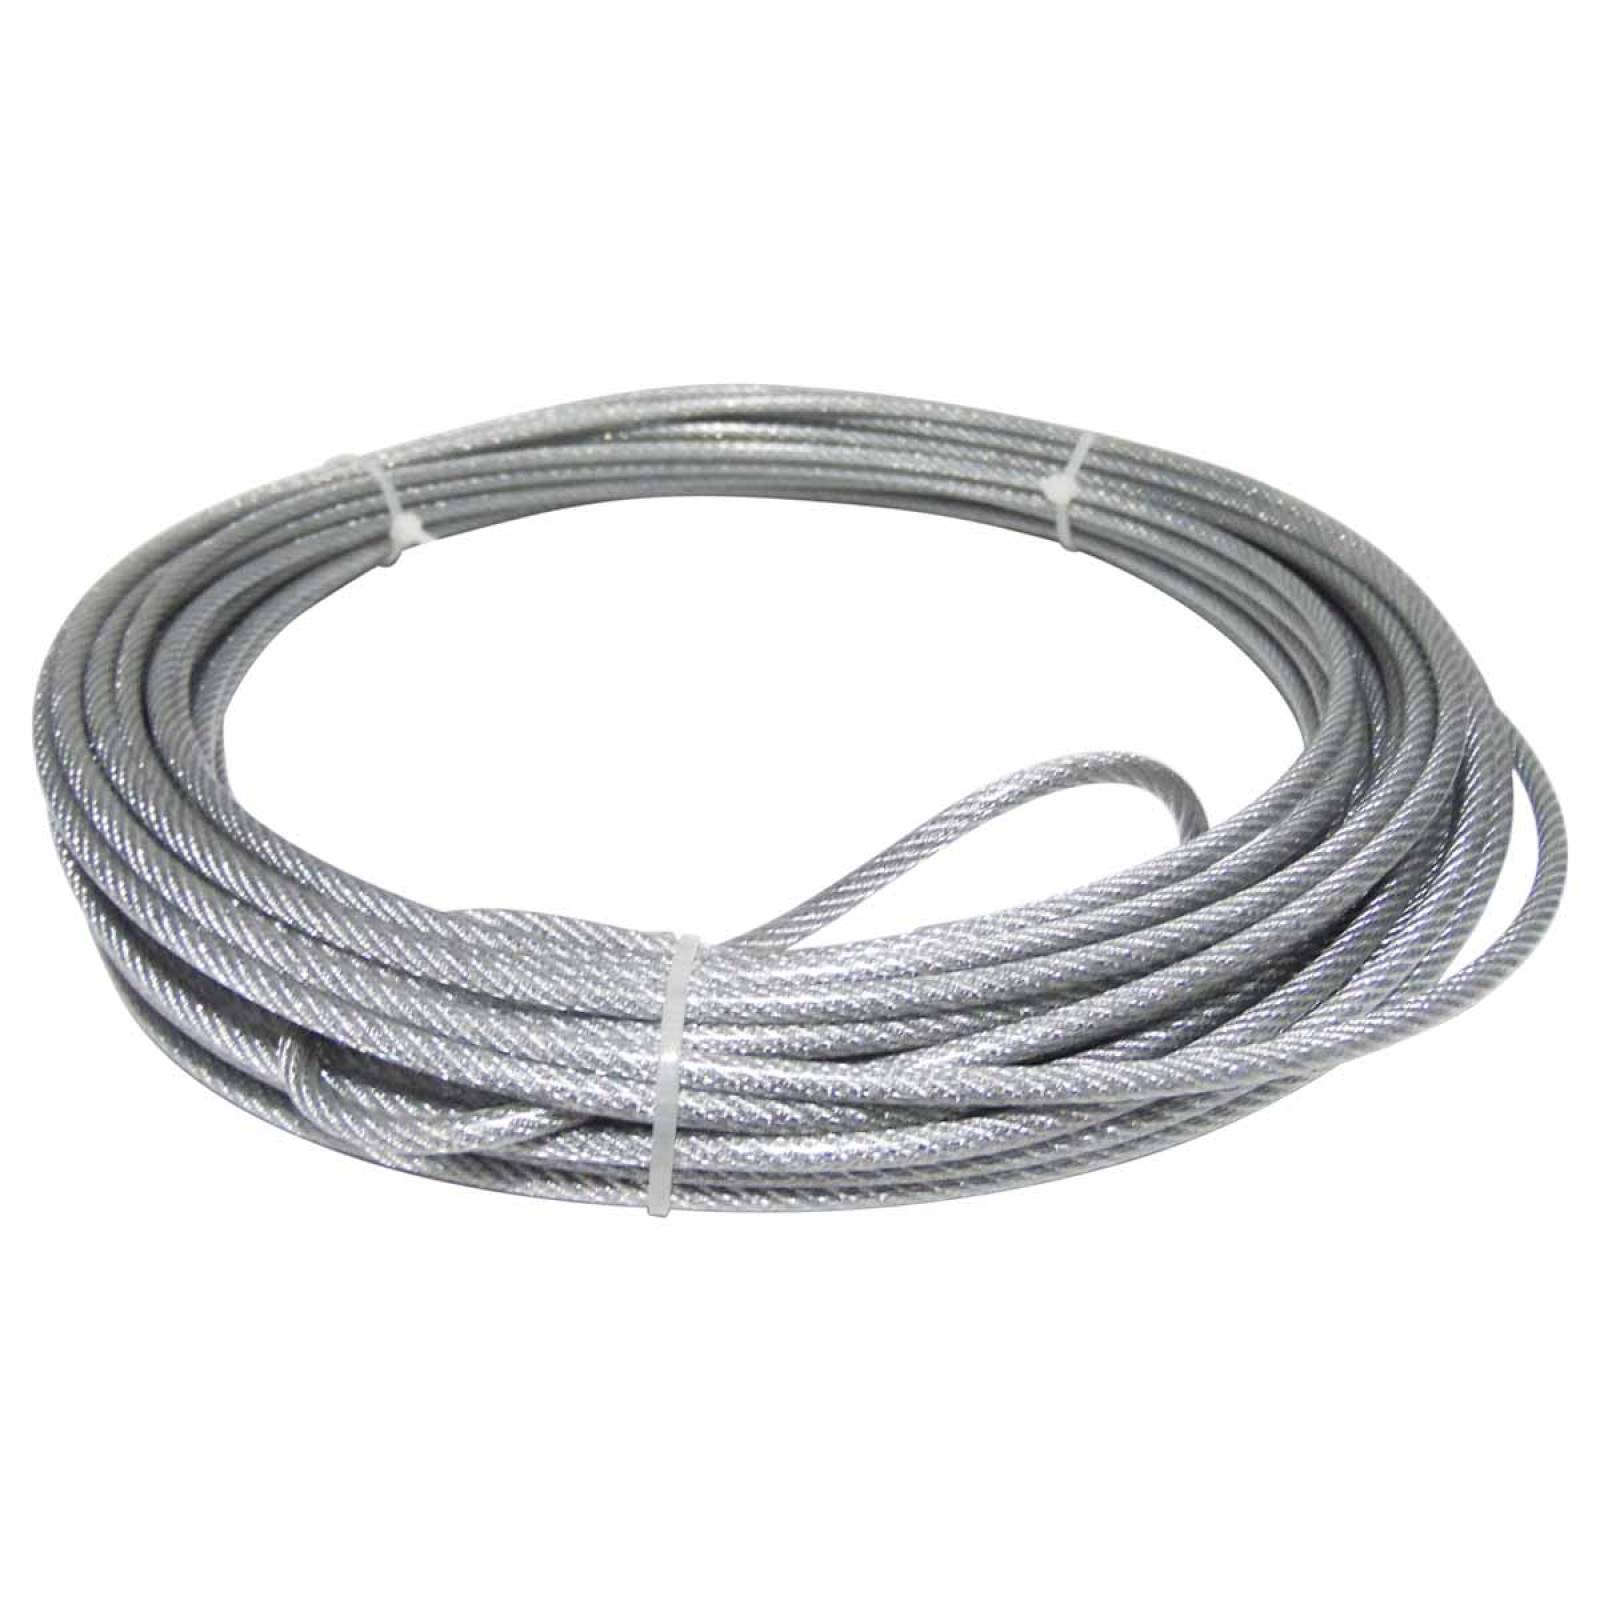 Cable De Acero Con Pvc Blister 7x7 3/32-1/8 15 M Obi 